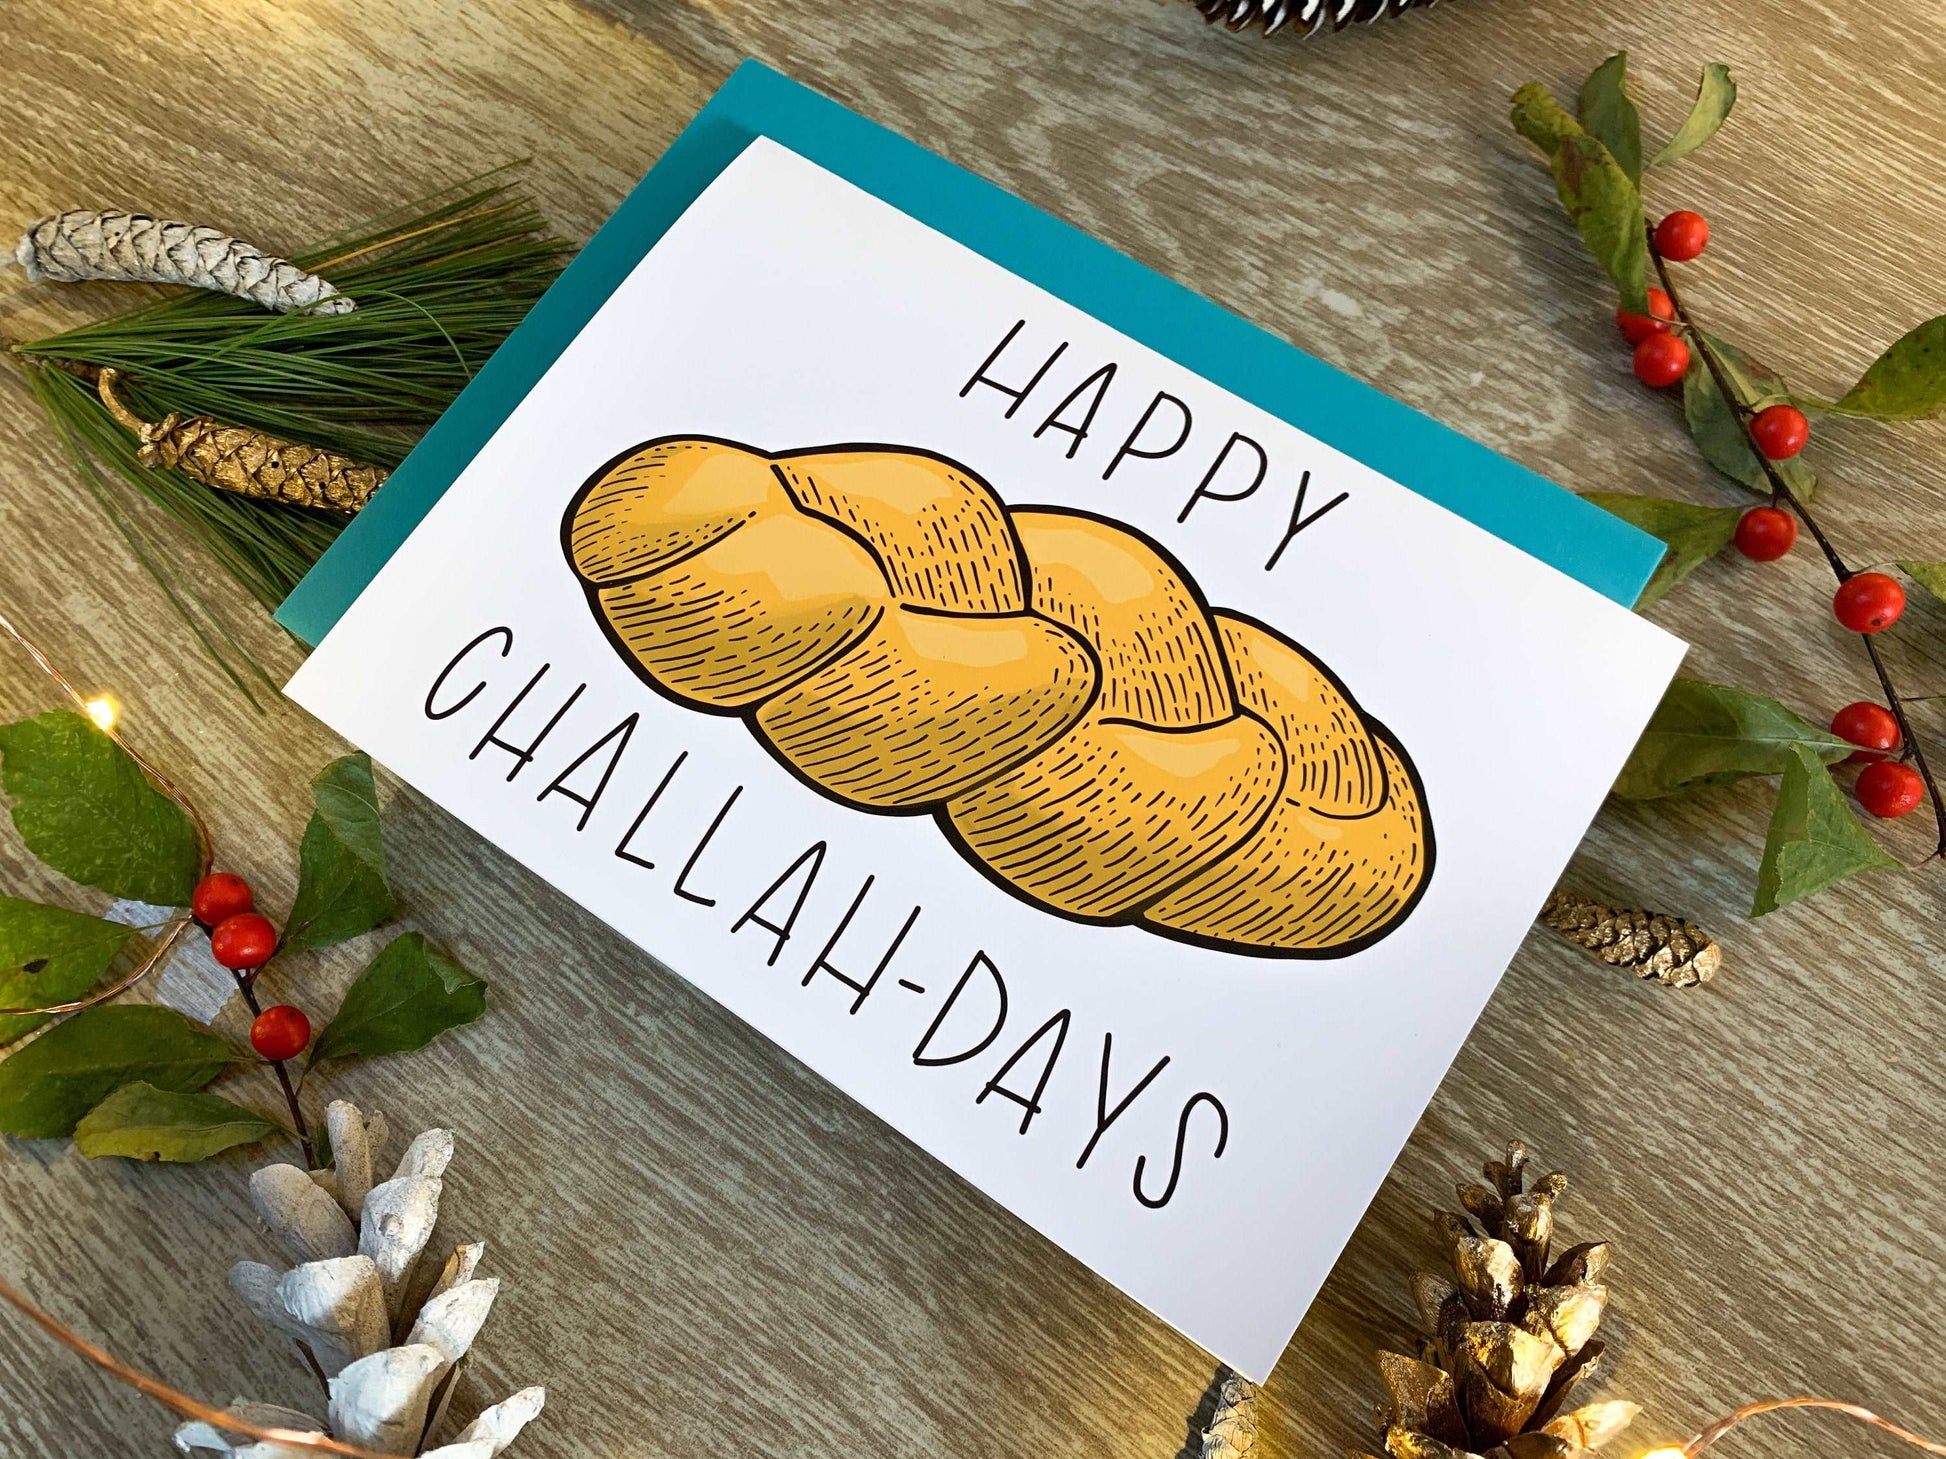 Challah Funny Handmade Hanukkah Card by StoneDonut Design